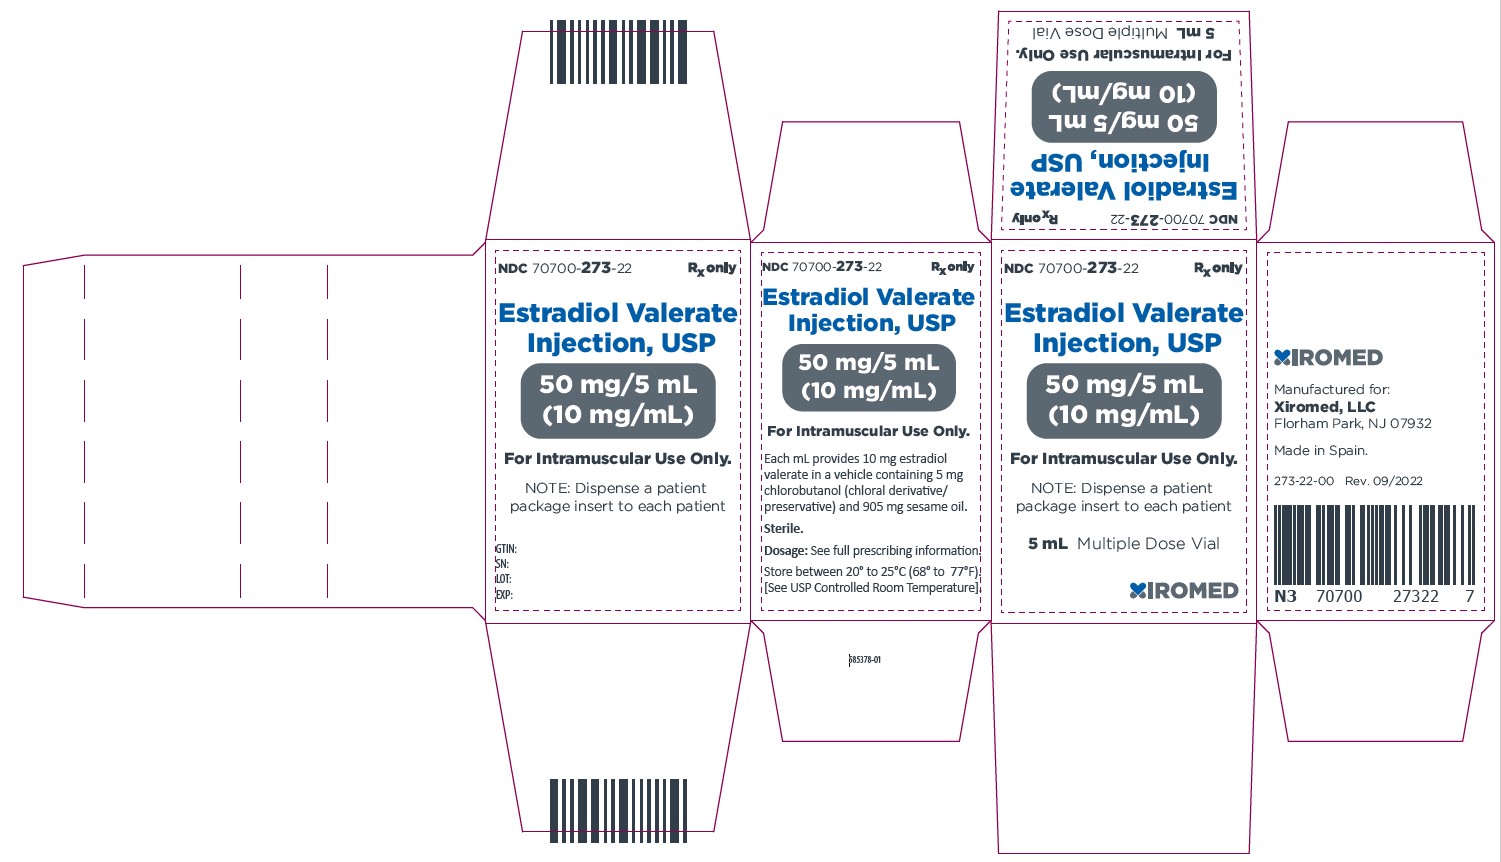 Estradiol valerate injection, USP  10 mg/mL - NDC 70700-273-22 - Carton Label